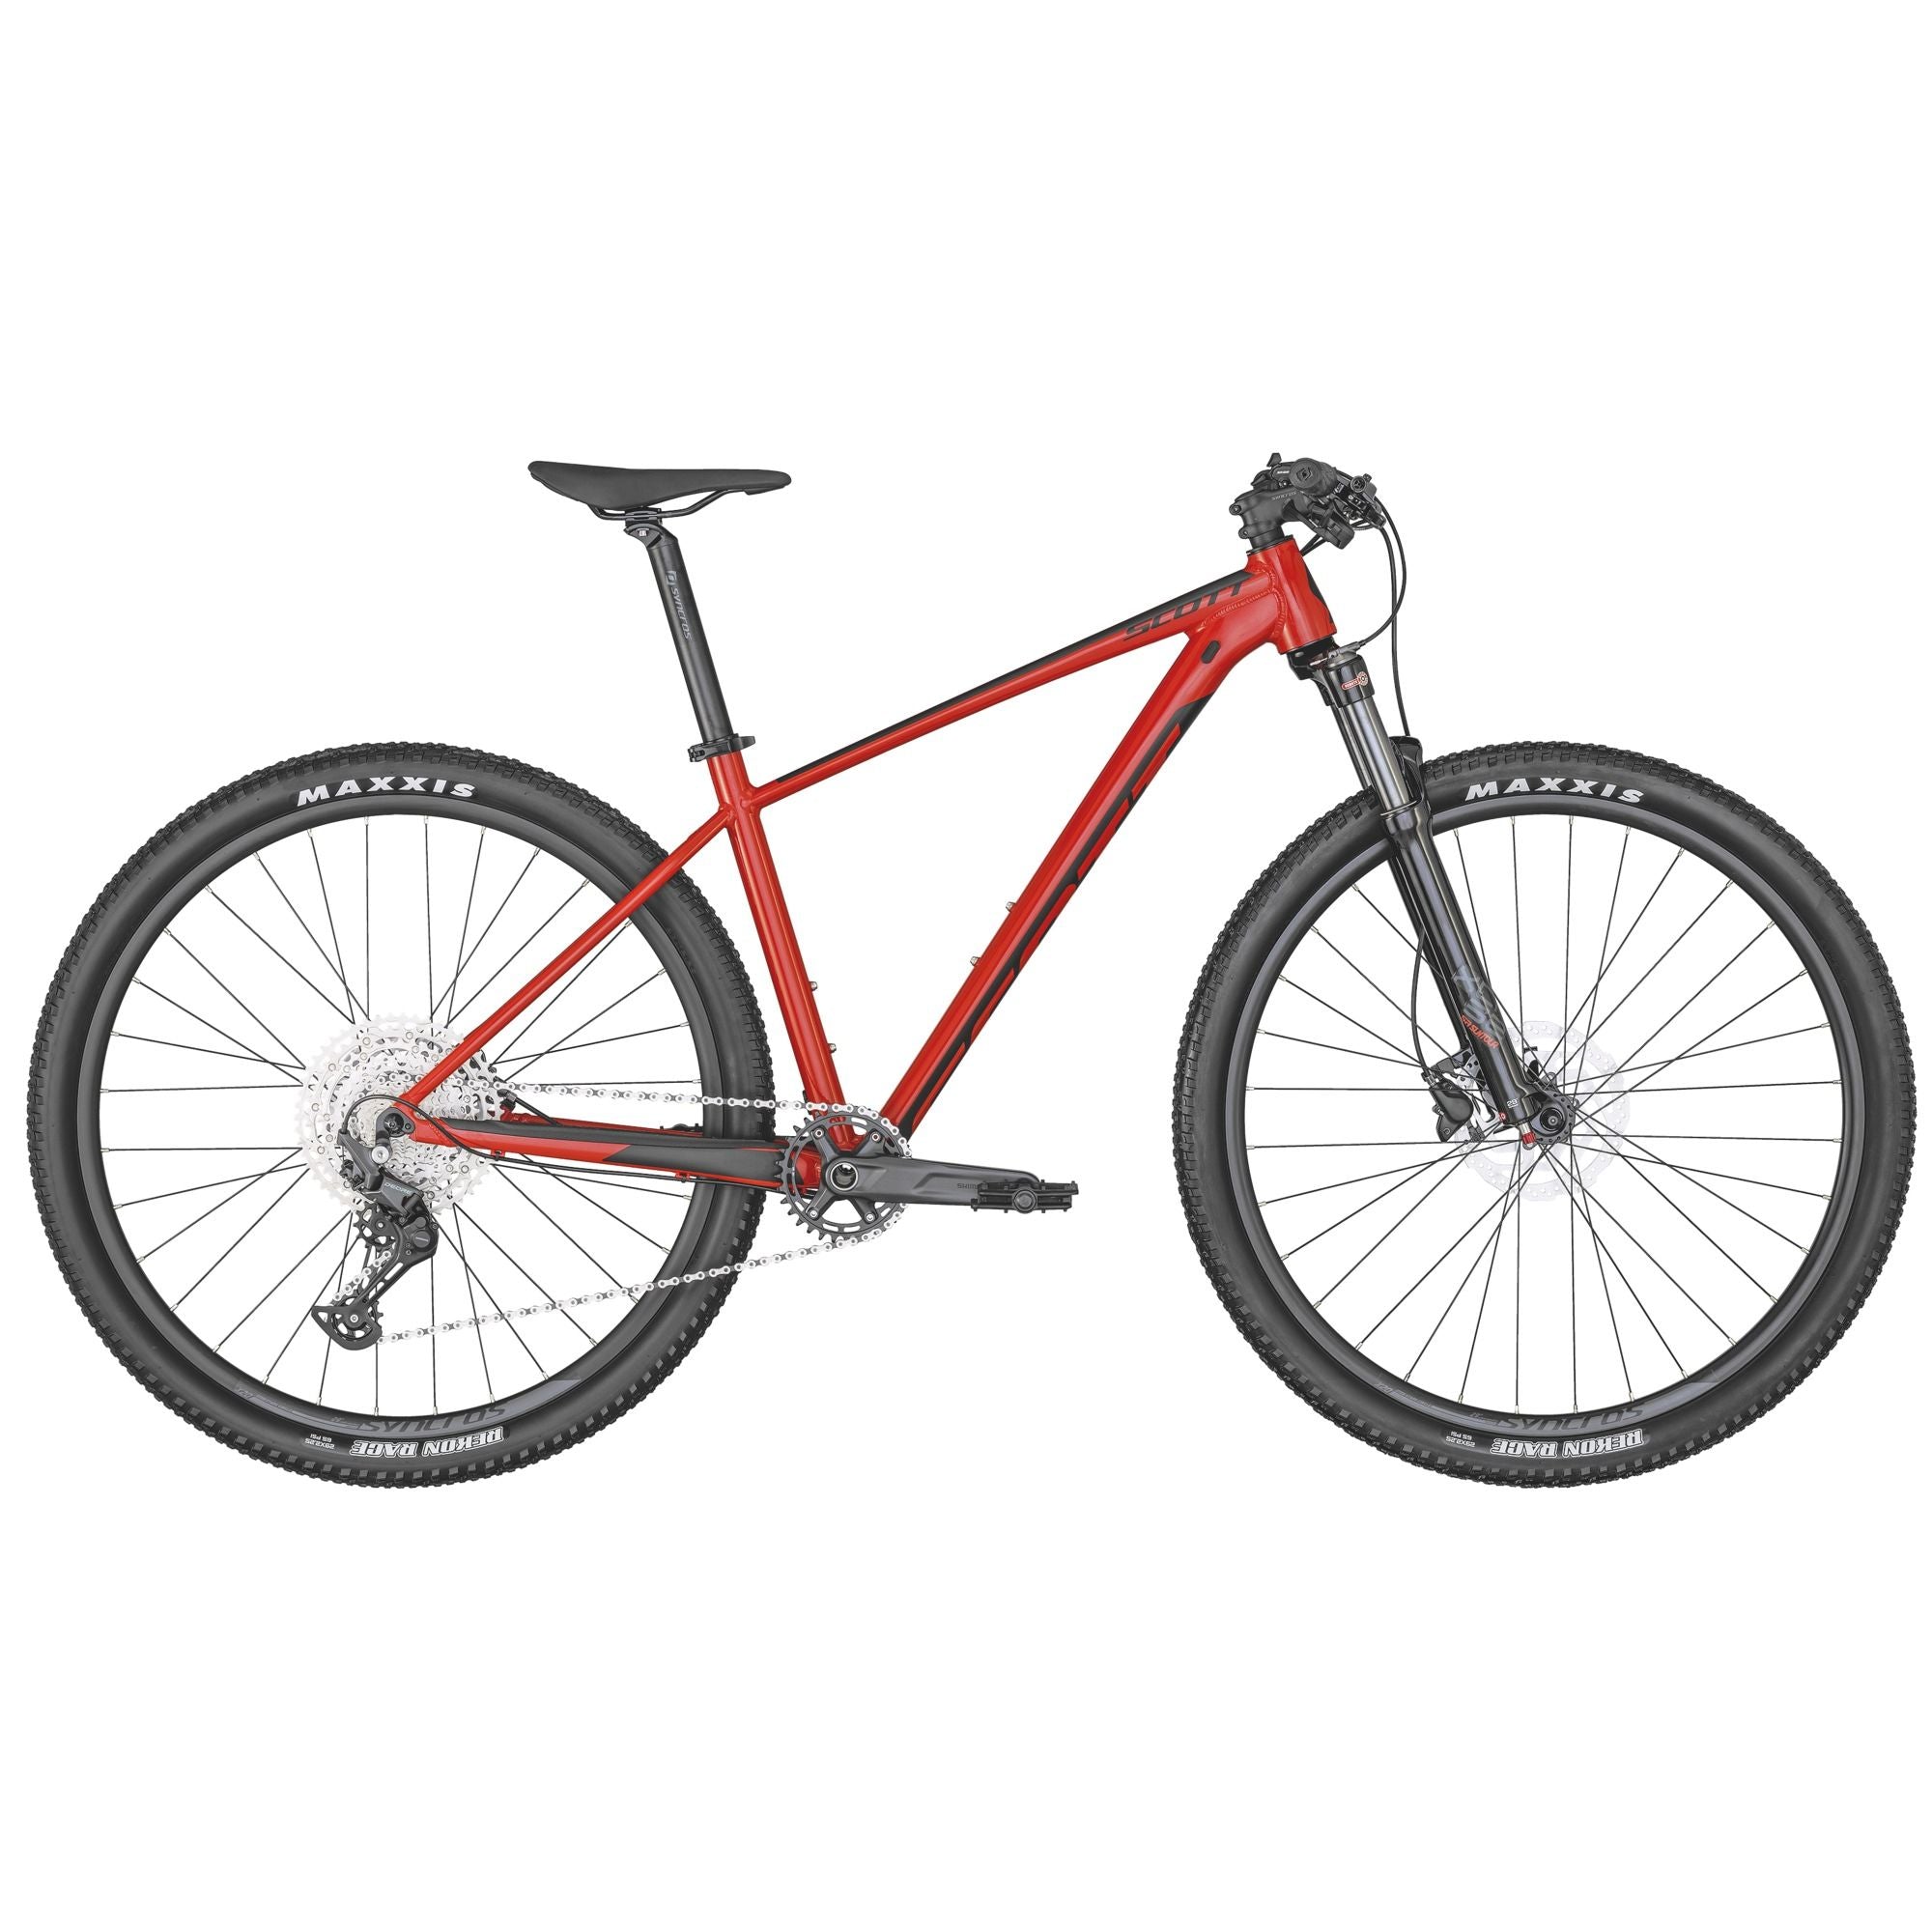 Bicicleta Mountain Bike Scale 980 + Casco y Luces